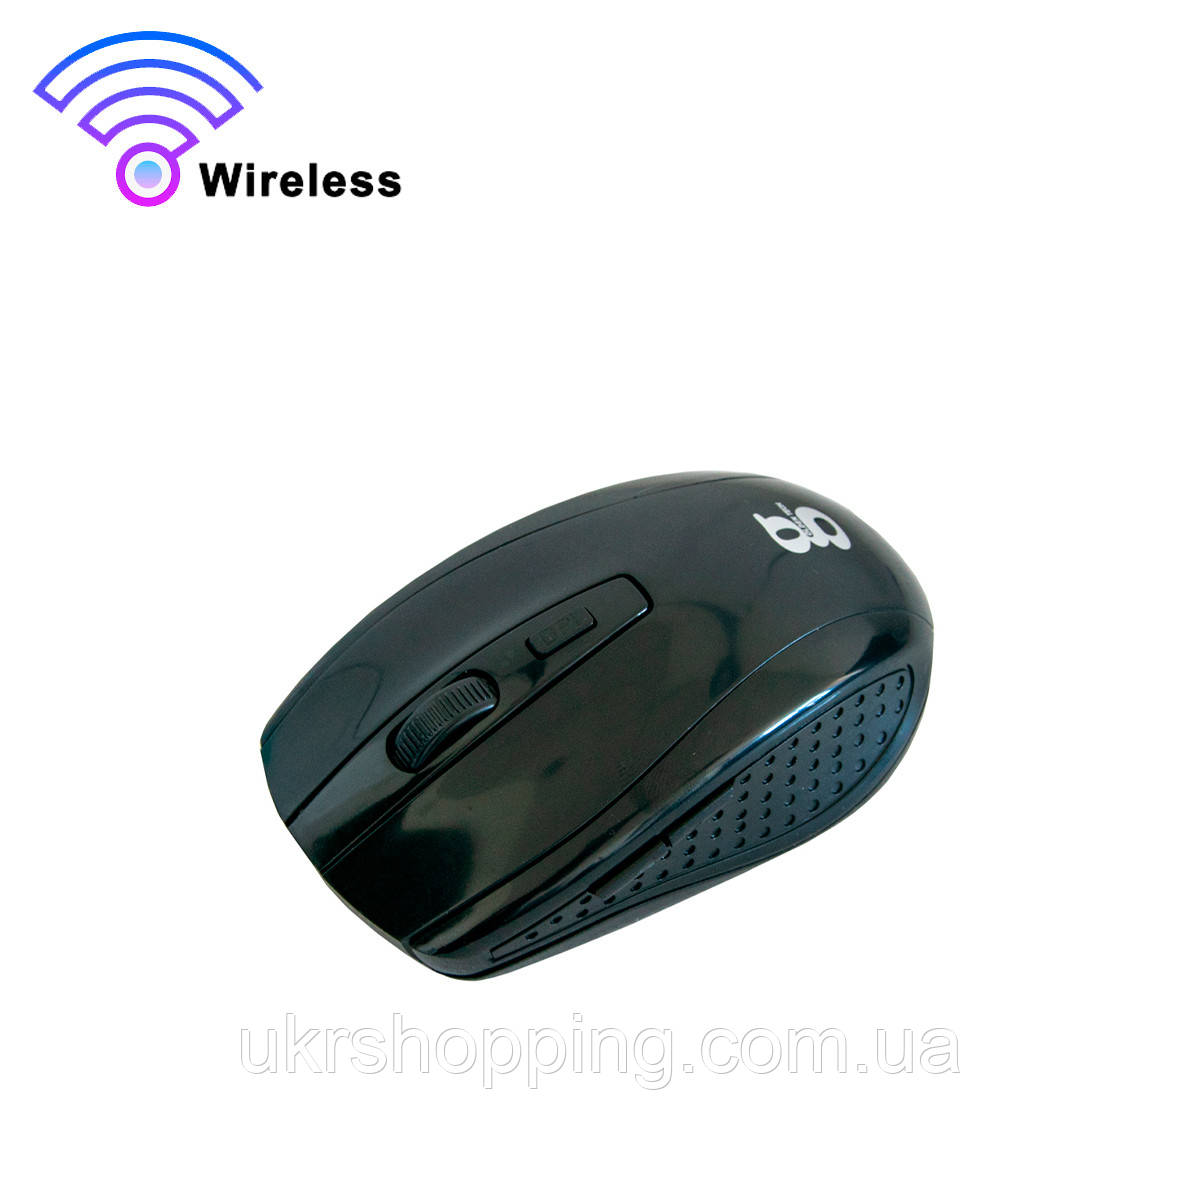 Бездротова мишка Mouse G109 Wireless Чорна мишка для ПК та ноутбука, бездротова миша